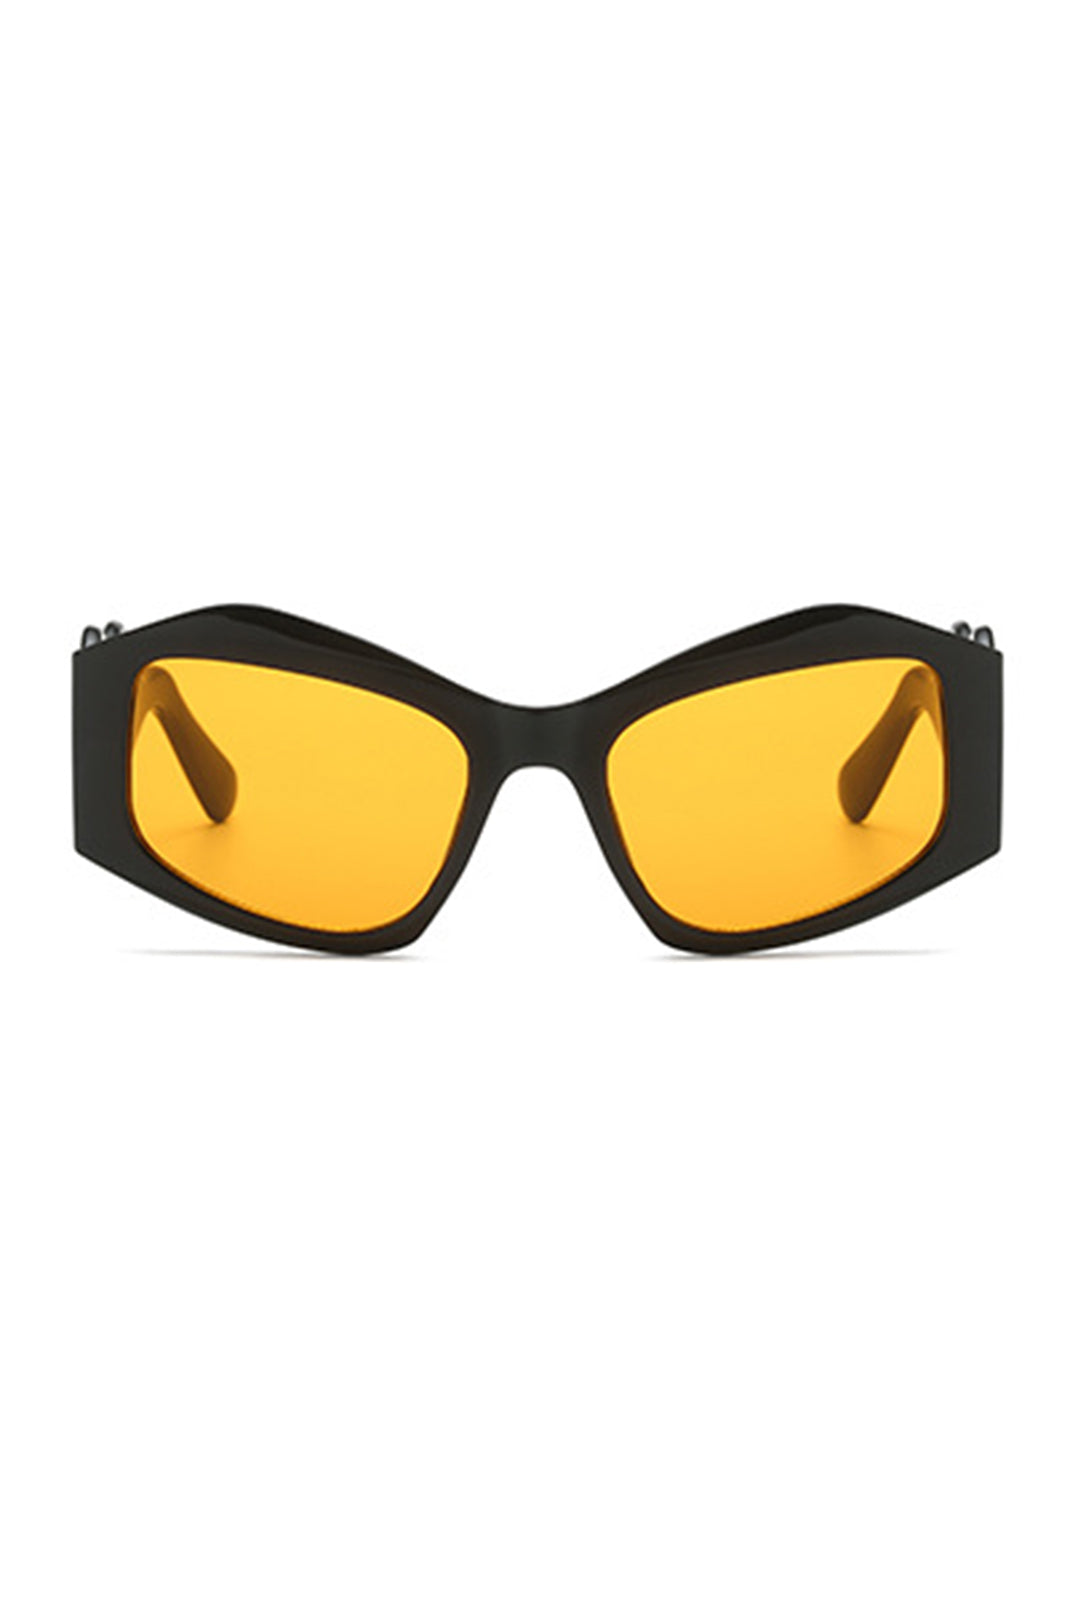 Wavy Temple Design Sunglasses